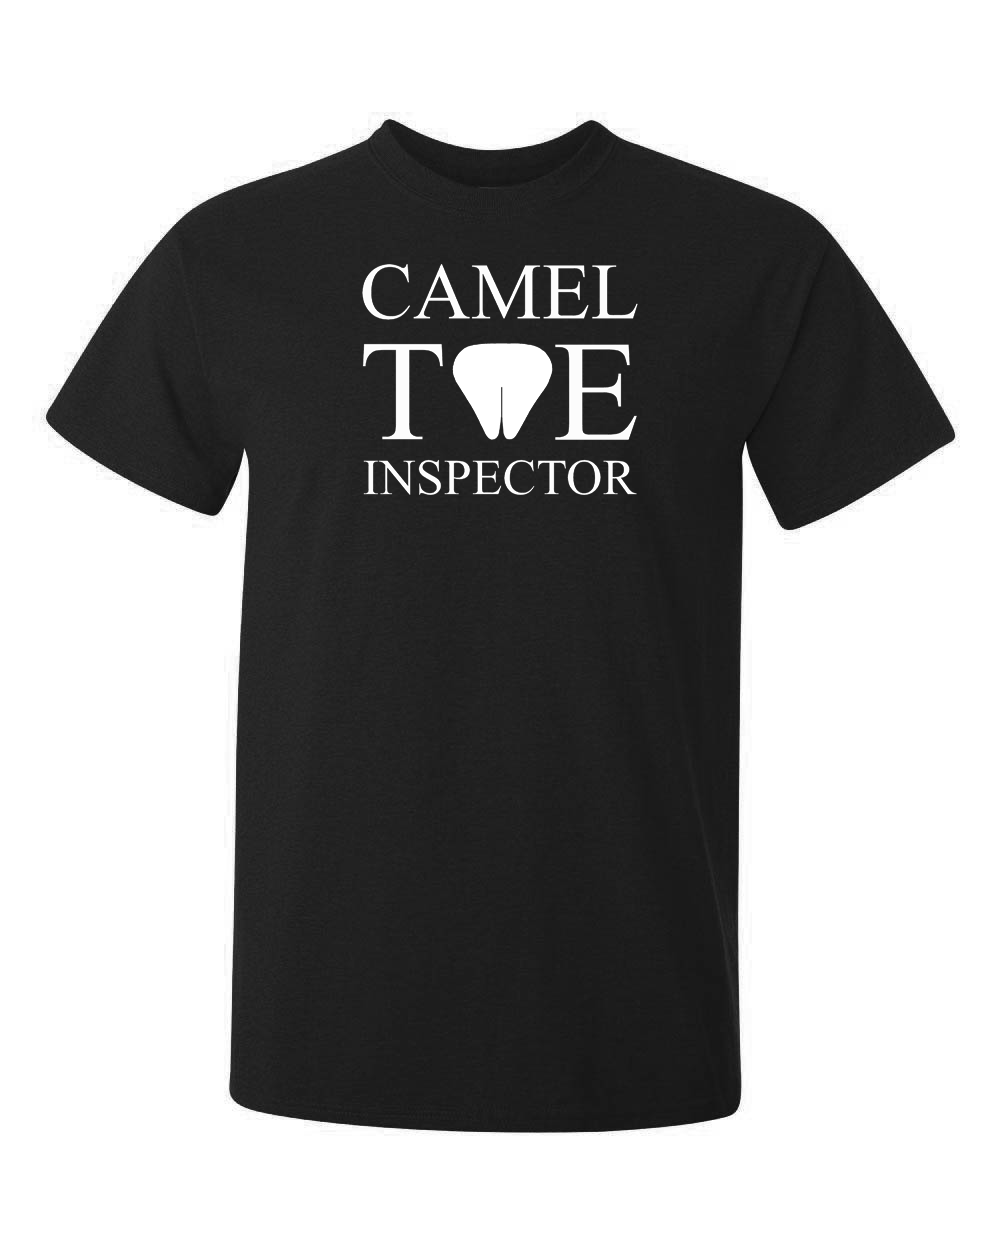 Camel toe inspector T-shirt